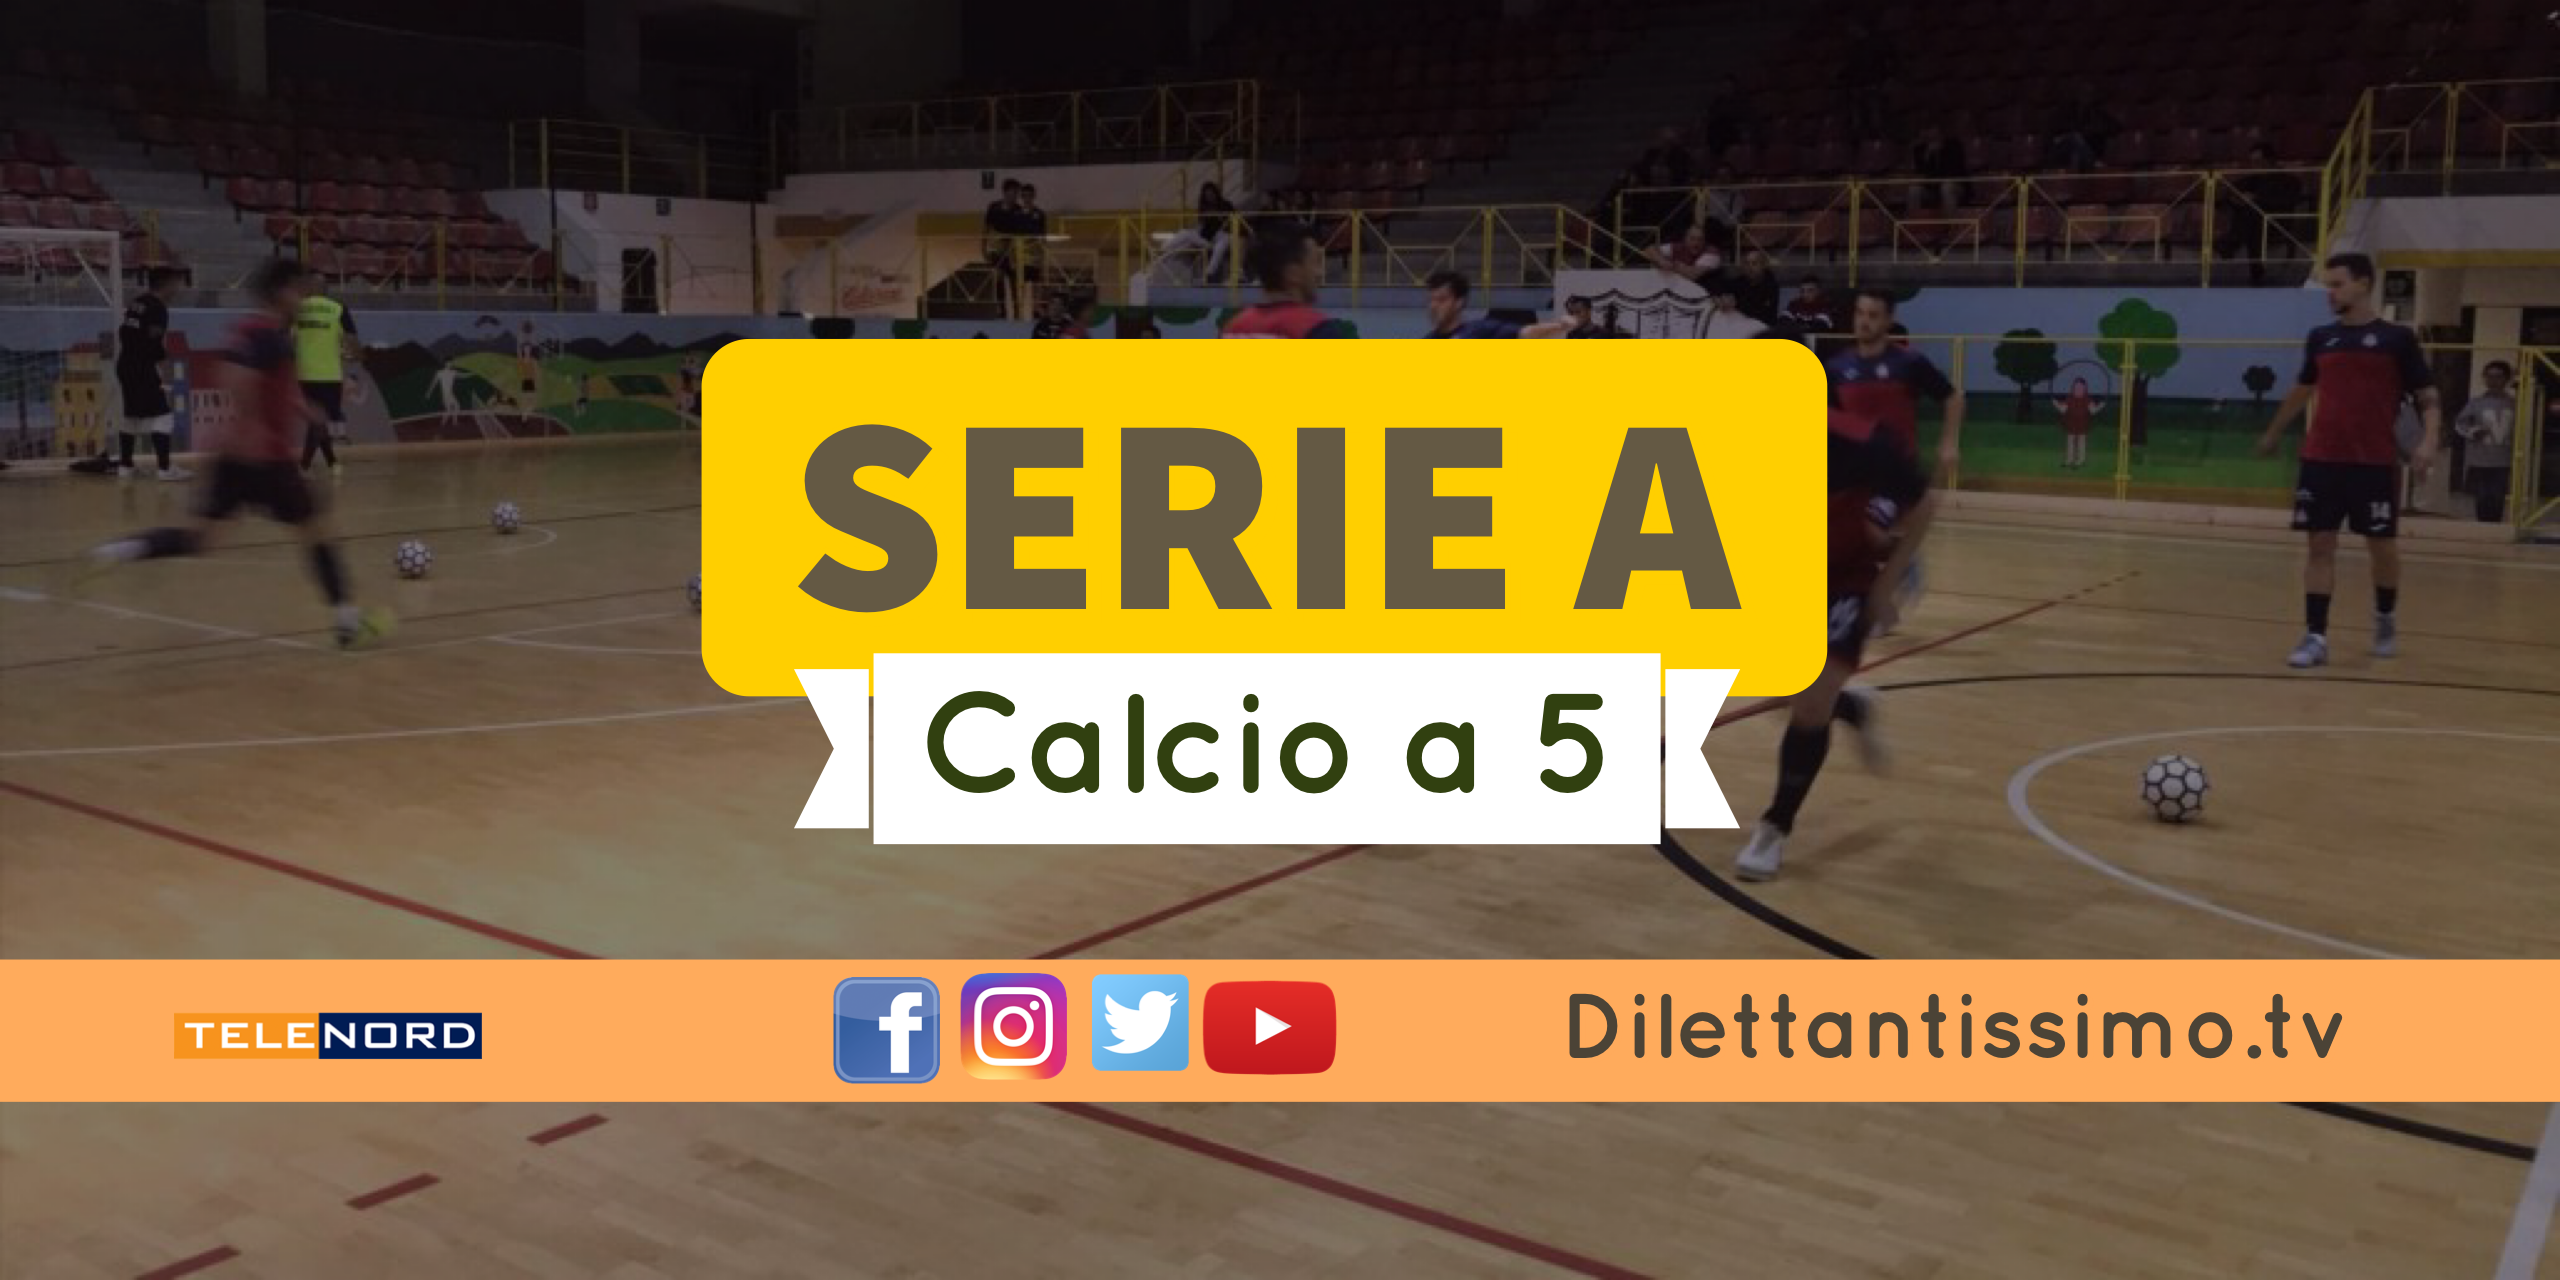 DIRETTA LIVE – SERIE A2 CALCIO A 5, 20ª GIORNATA